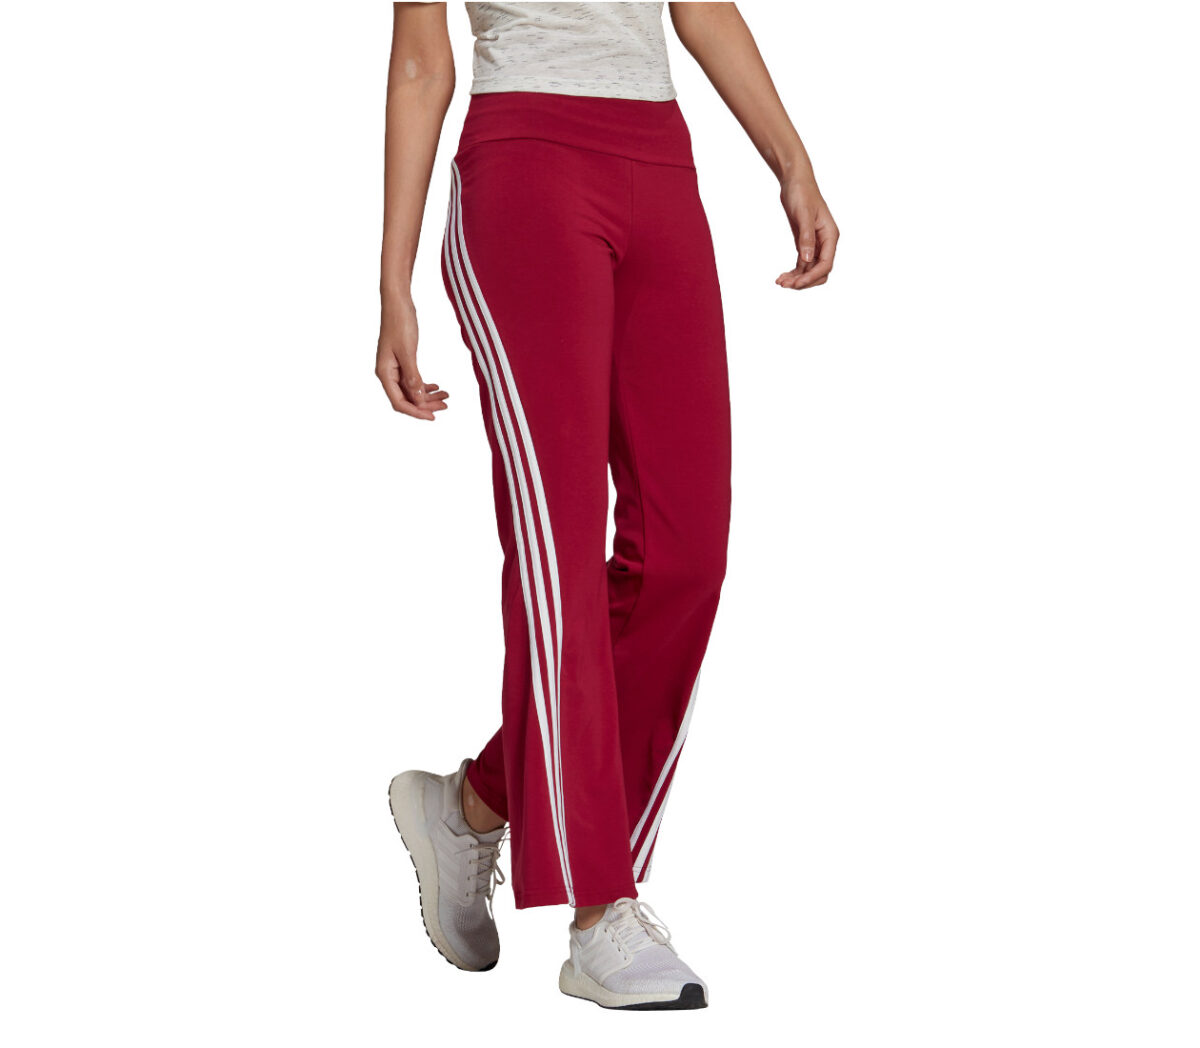 pantaloni da donna sportivi adidas rossi